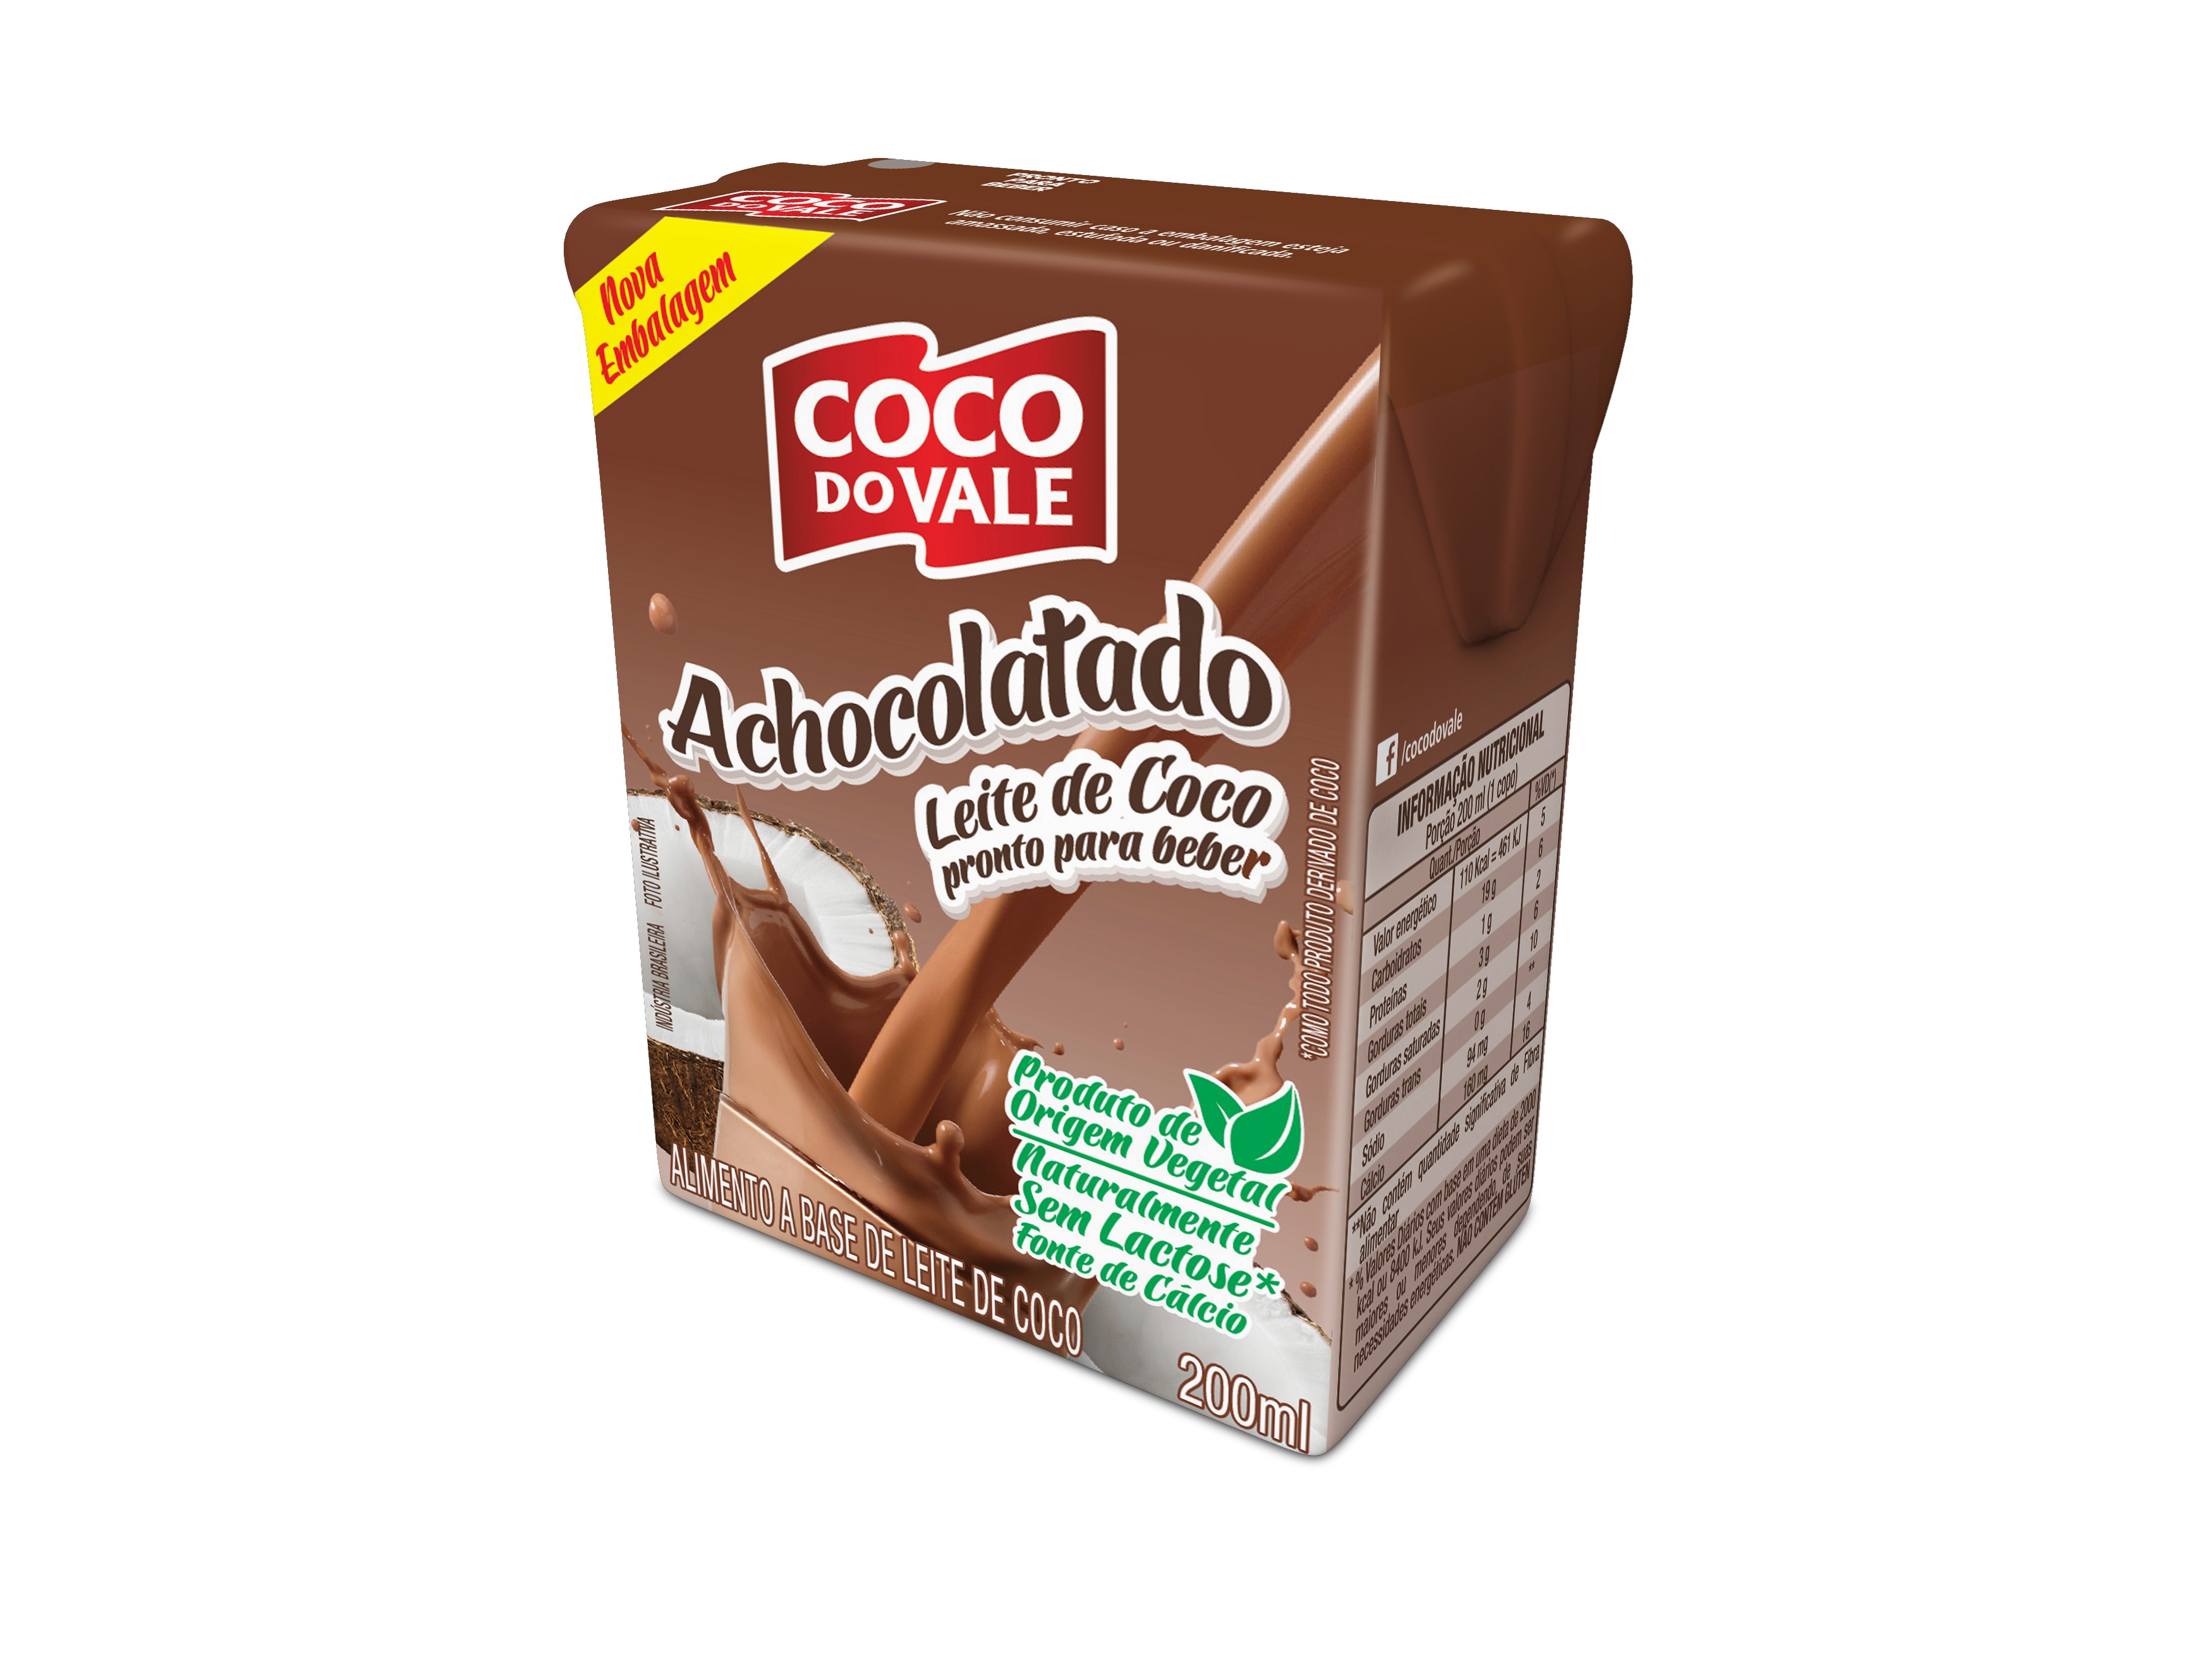 Coconut Milk beverage with Chocolate flavor, size 200ml